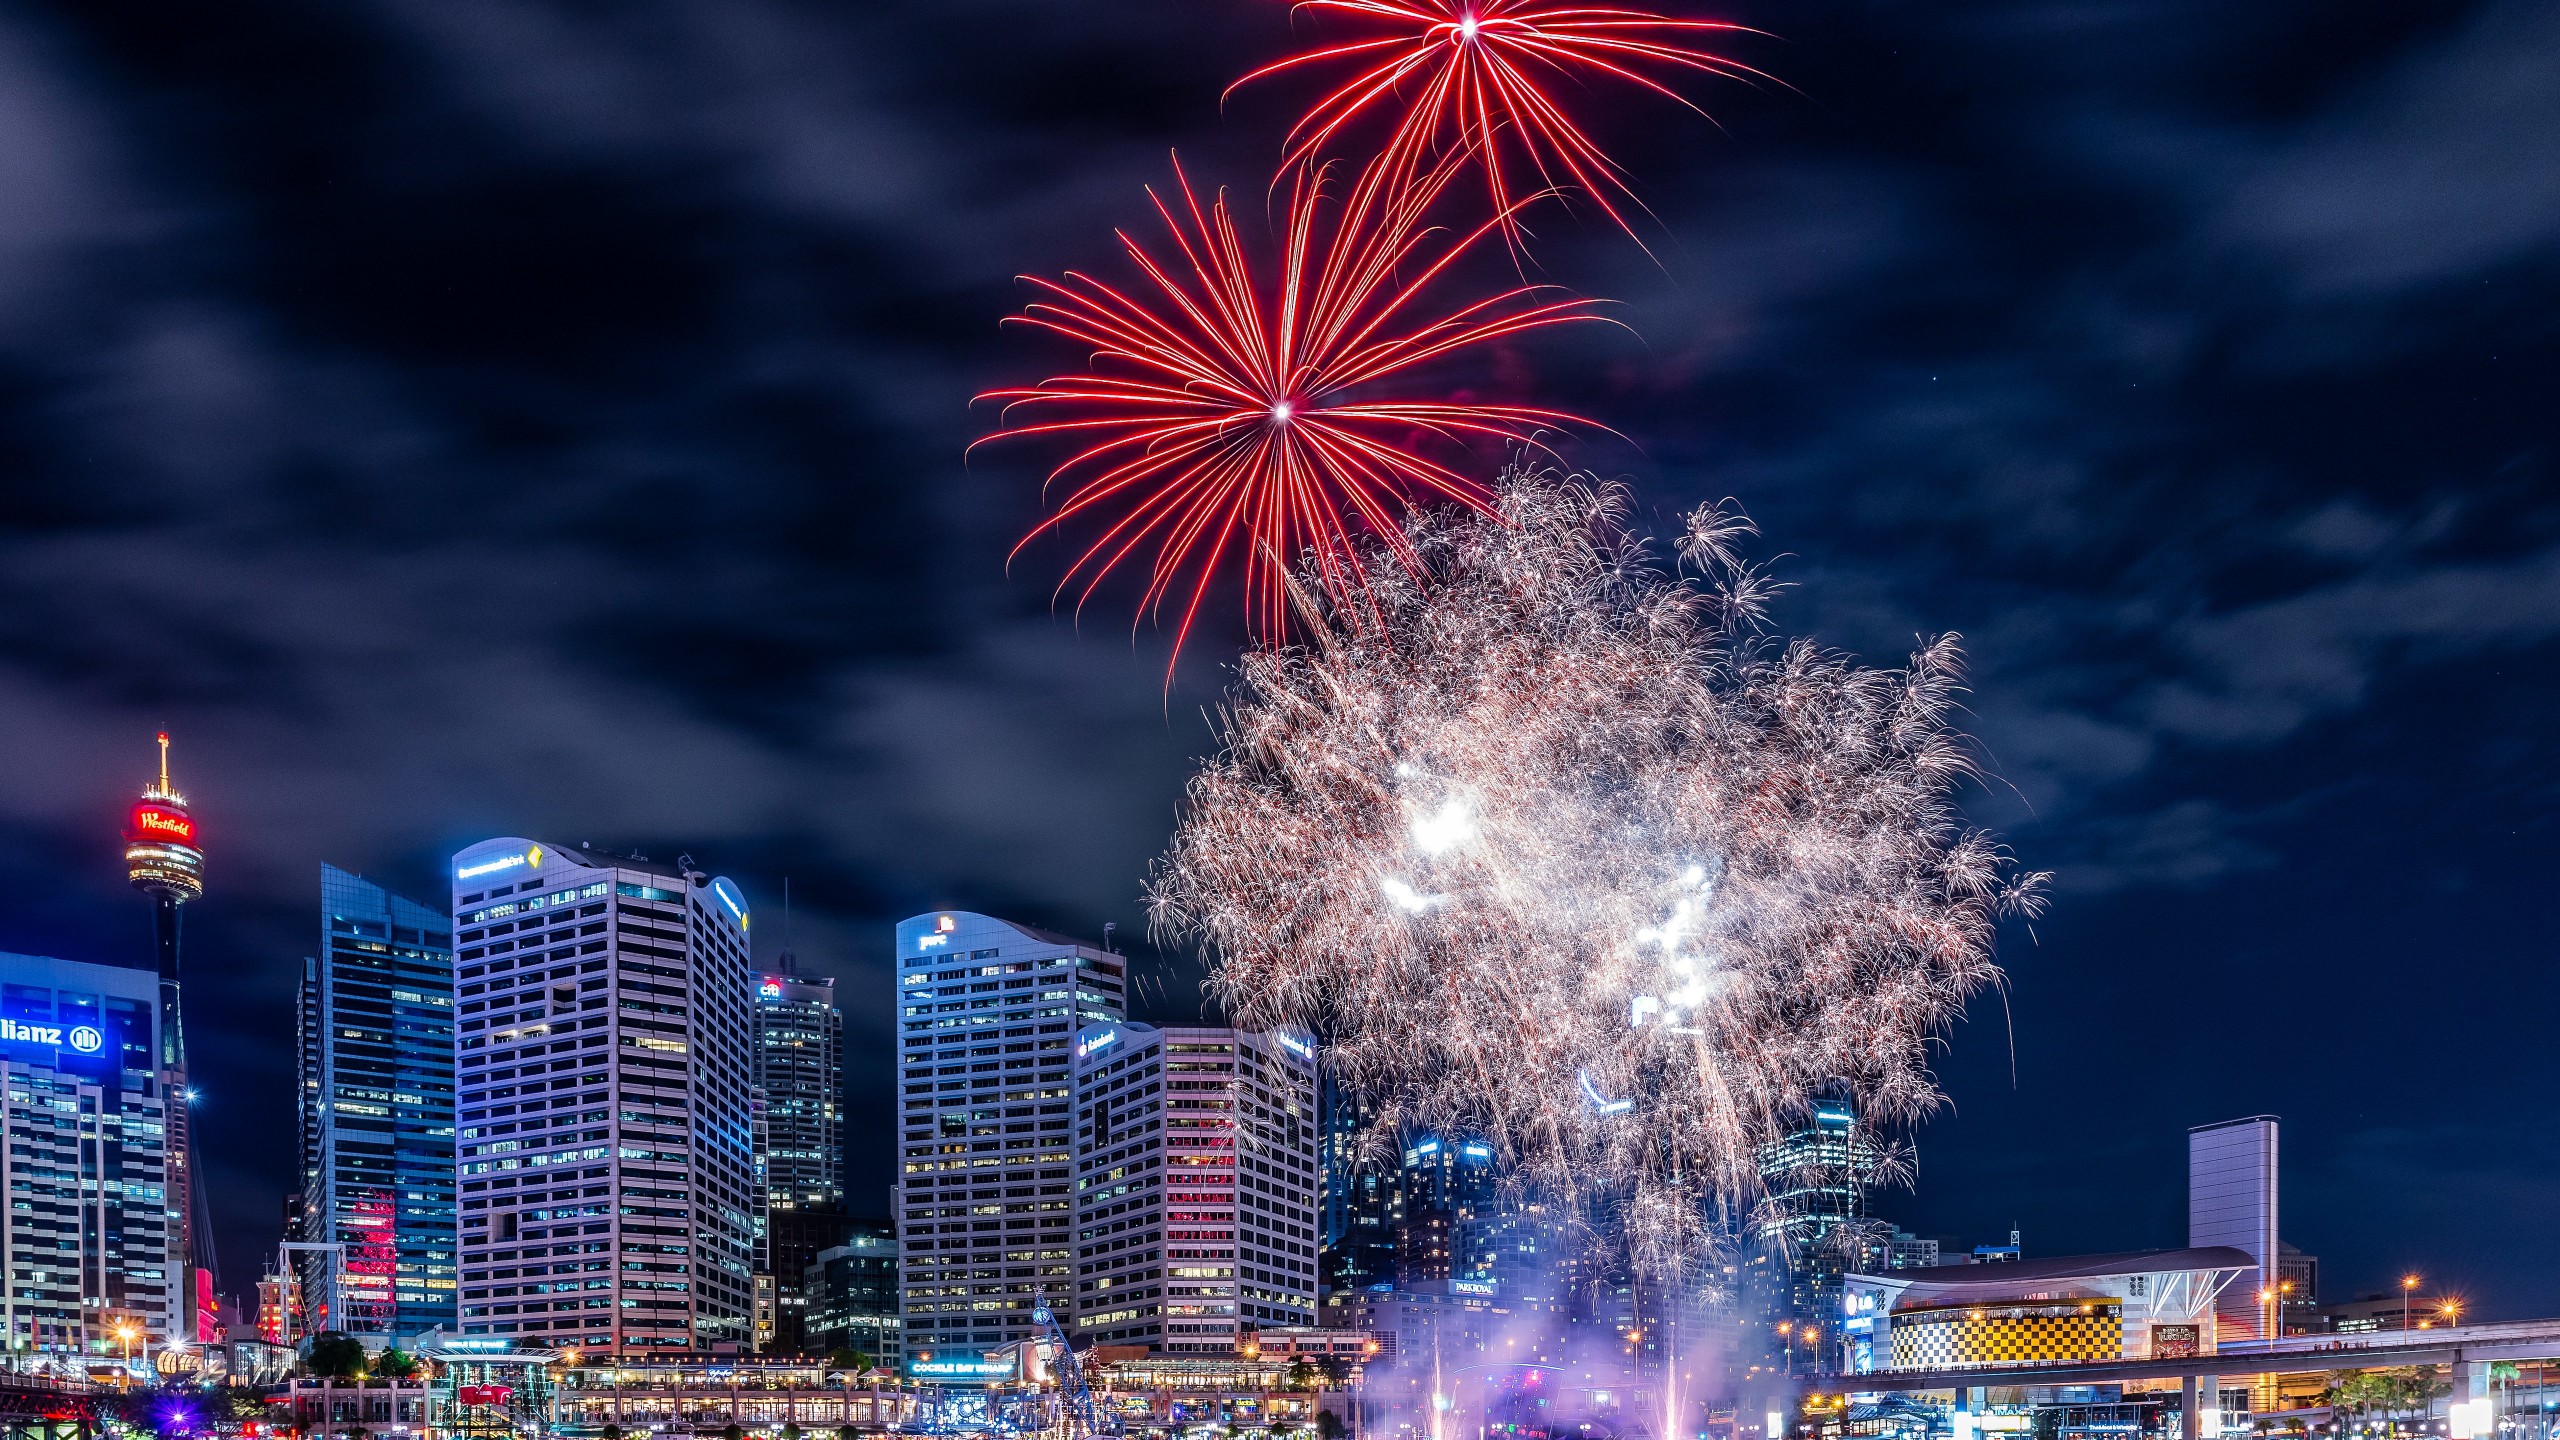 Fireworks In Darling Harbour Wallpaper for Social Media YouTube Channel Art